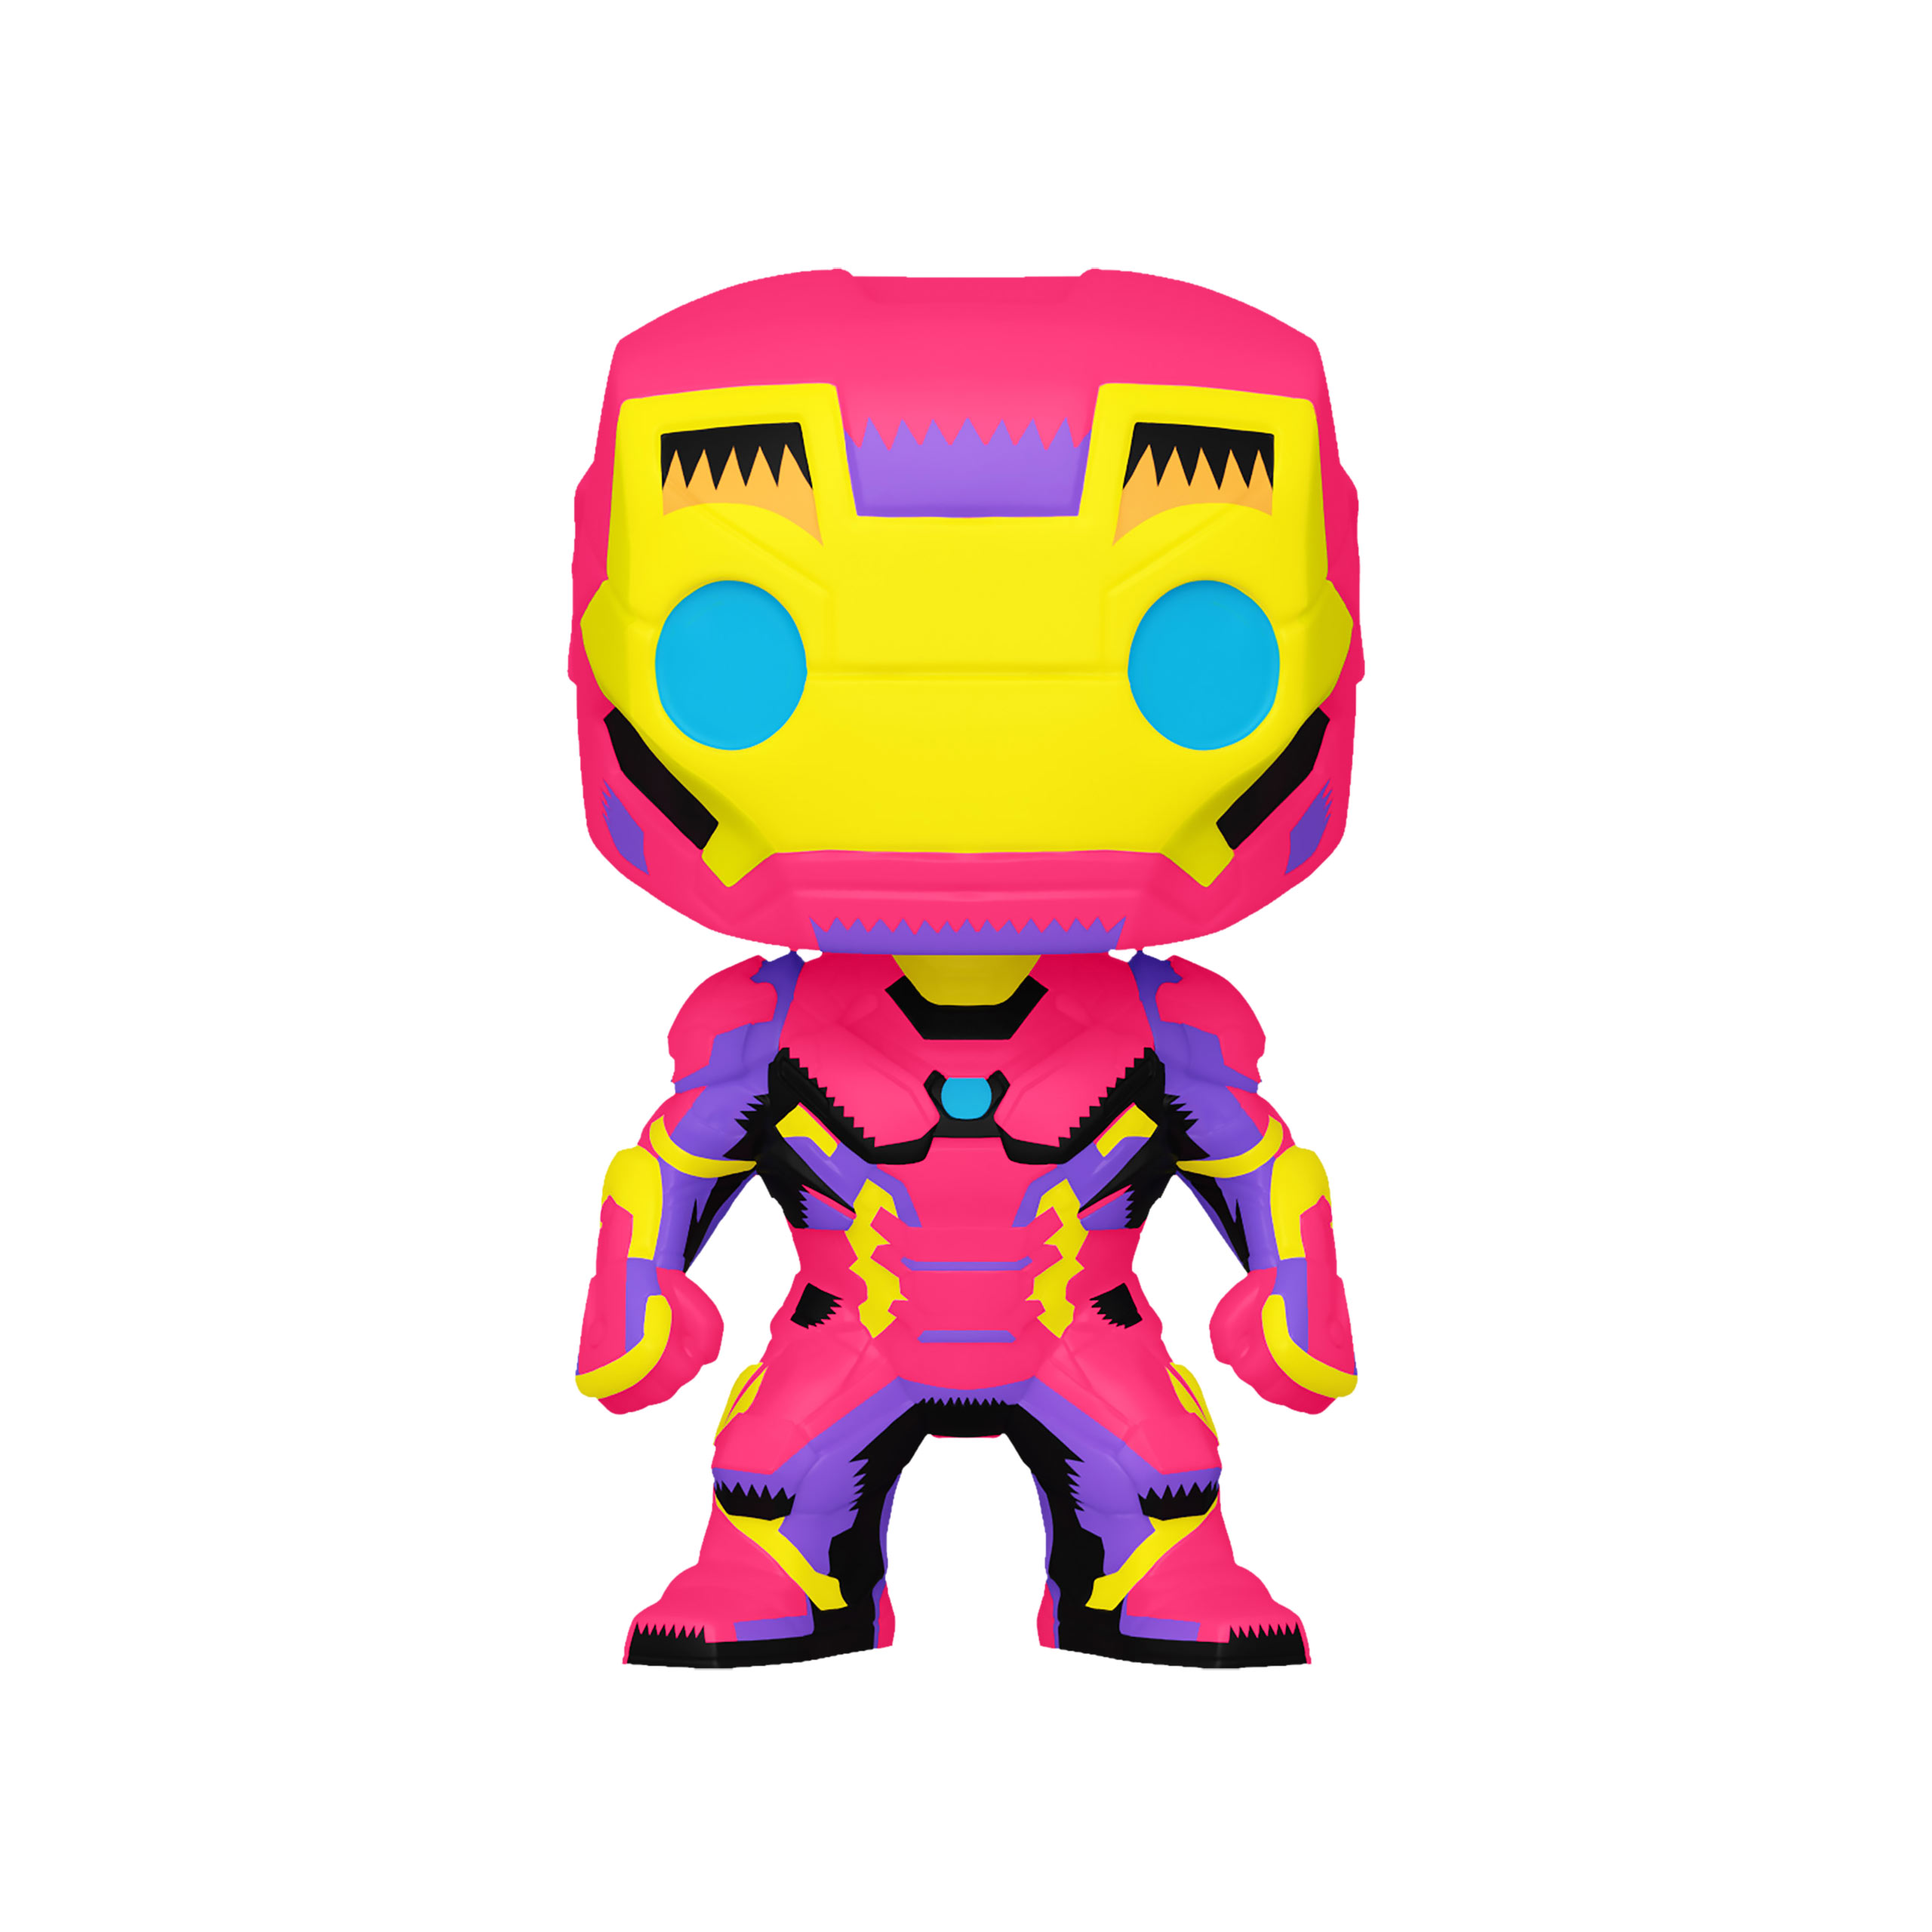 Iron Man - Funko Pop Black Light Glow Bobblehead Figuur